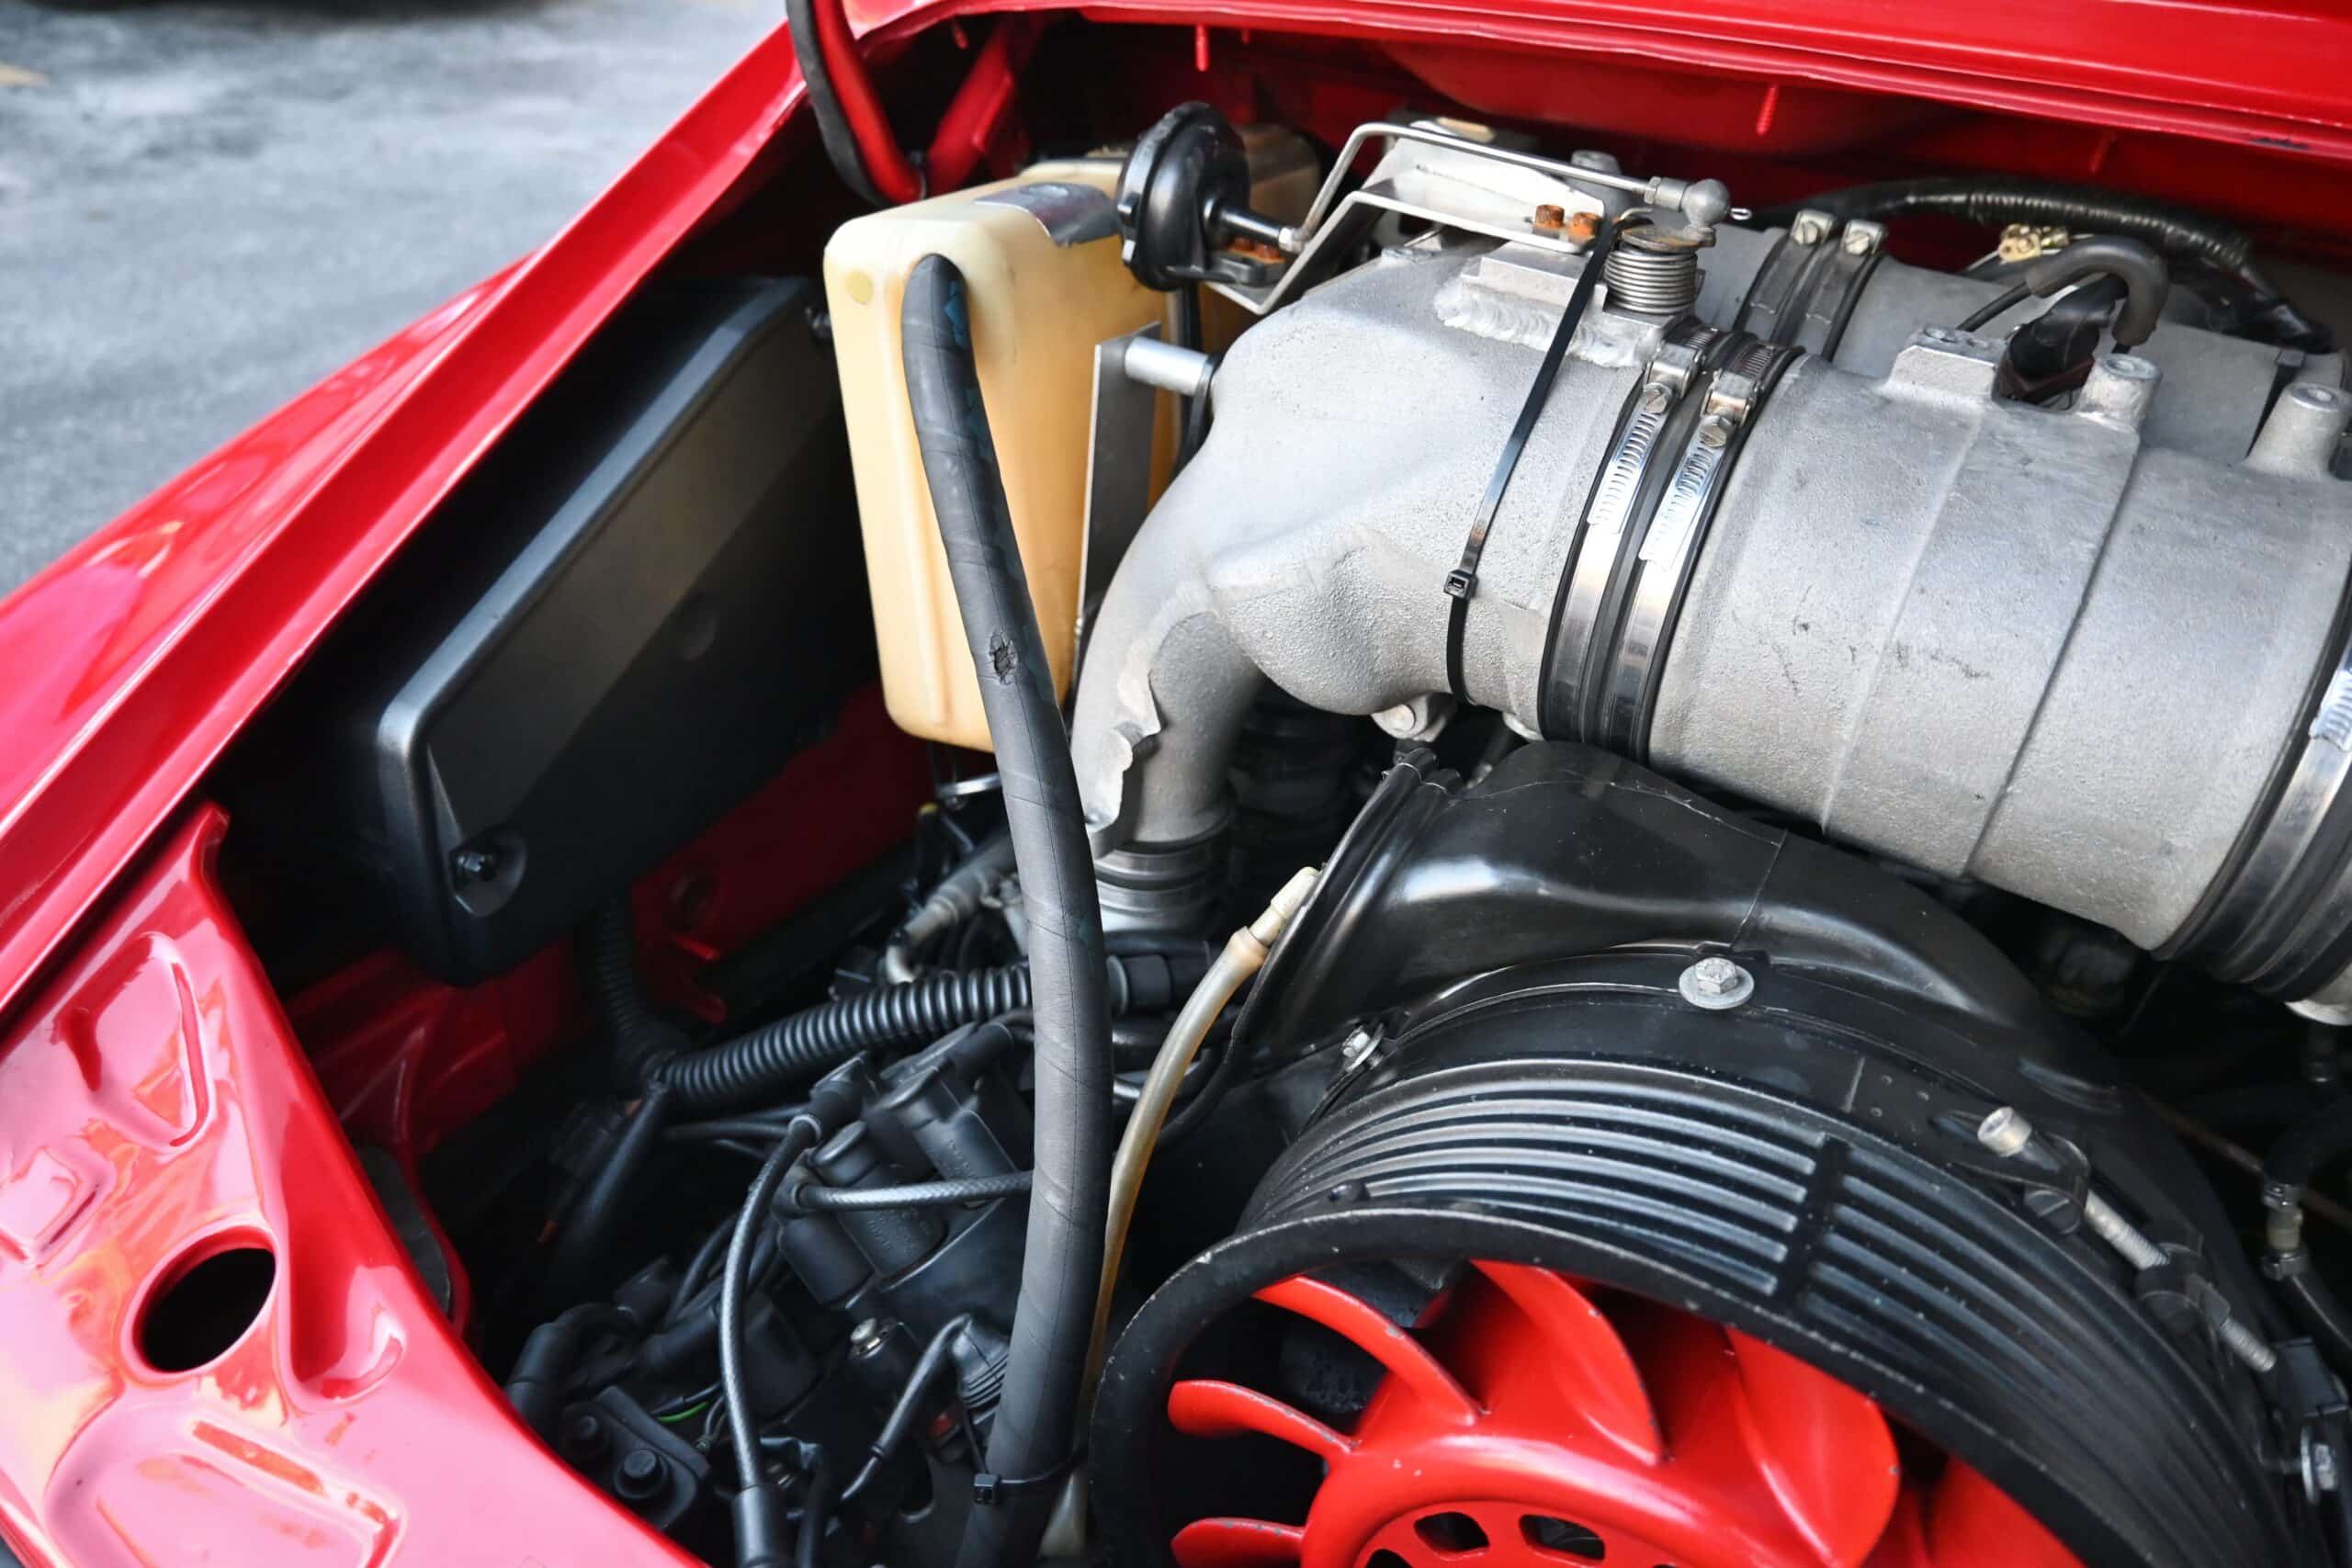 1992 Porsche 911 964 Carrera RS 3.8L Freisenger motor / 6 speed G50/30 Cup transmission /Carbon Lightweight body